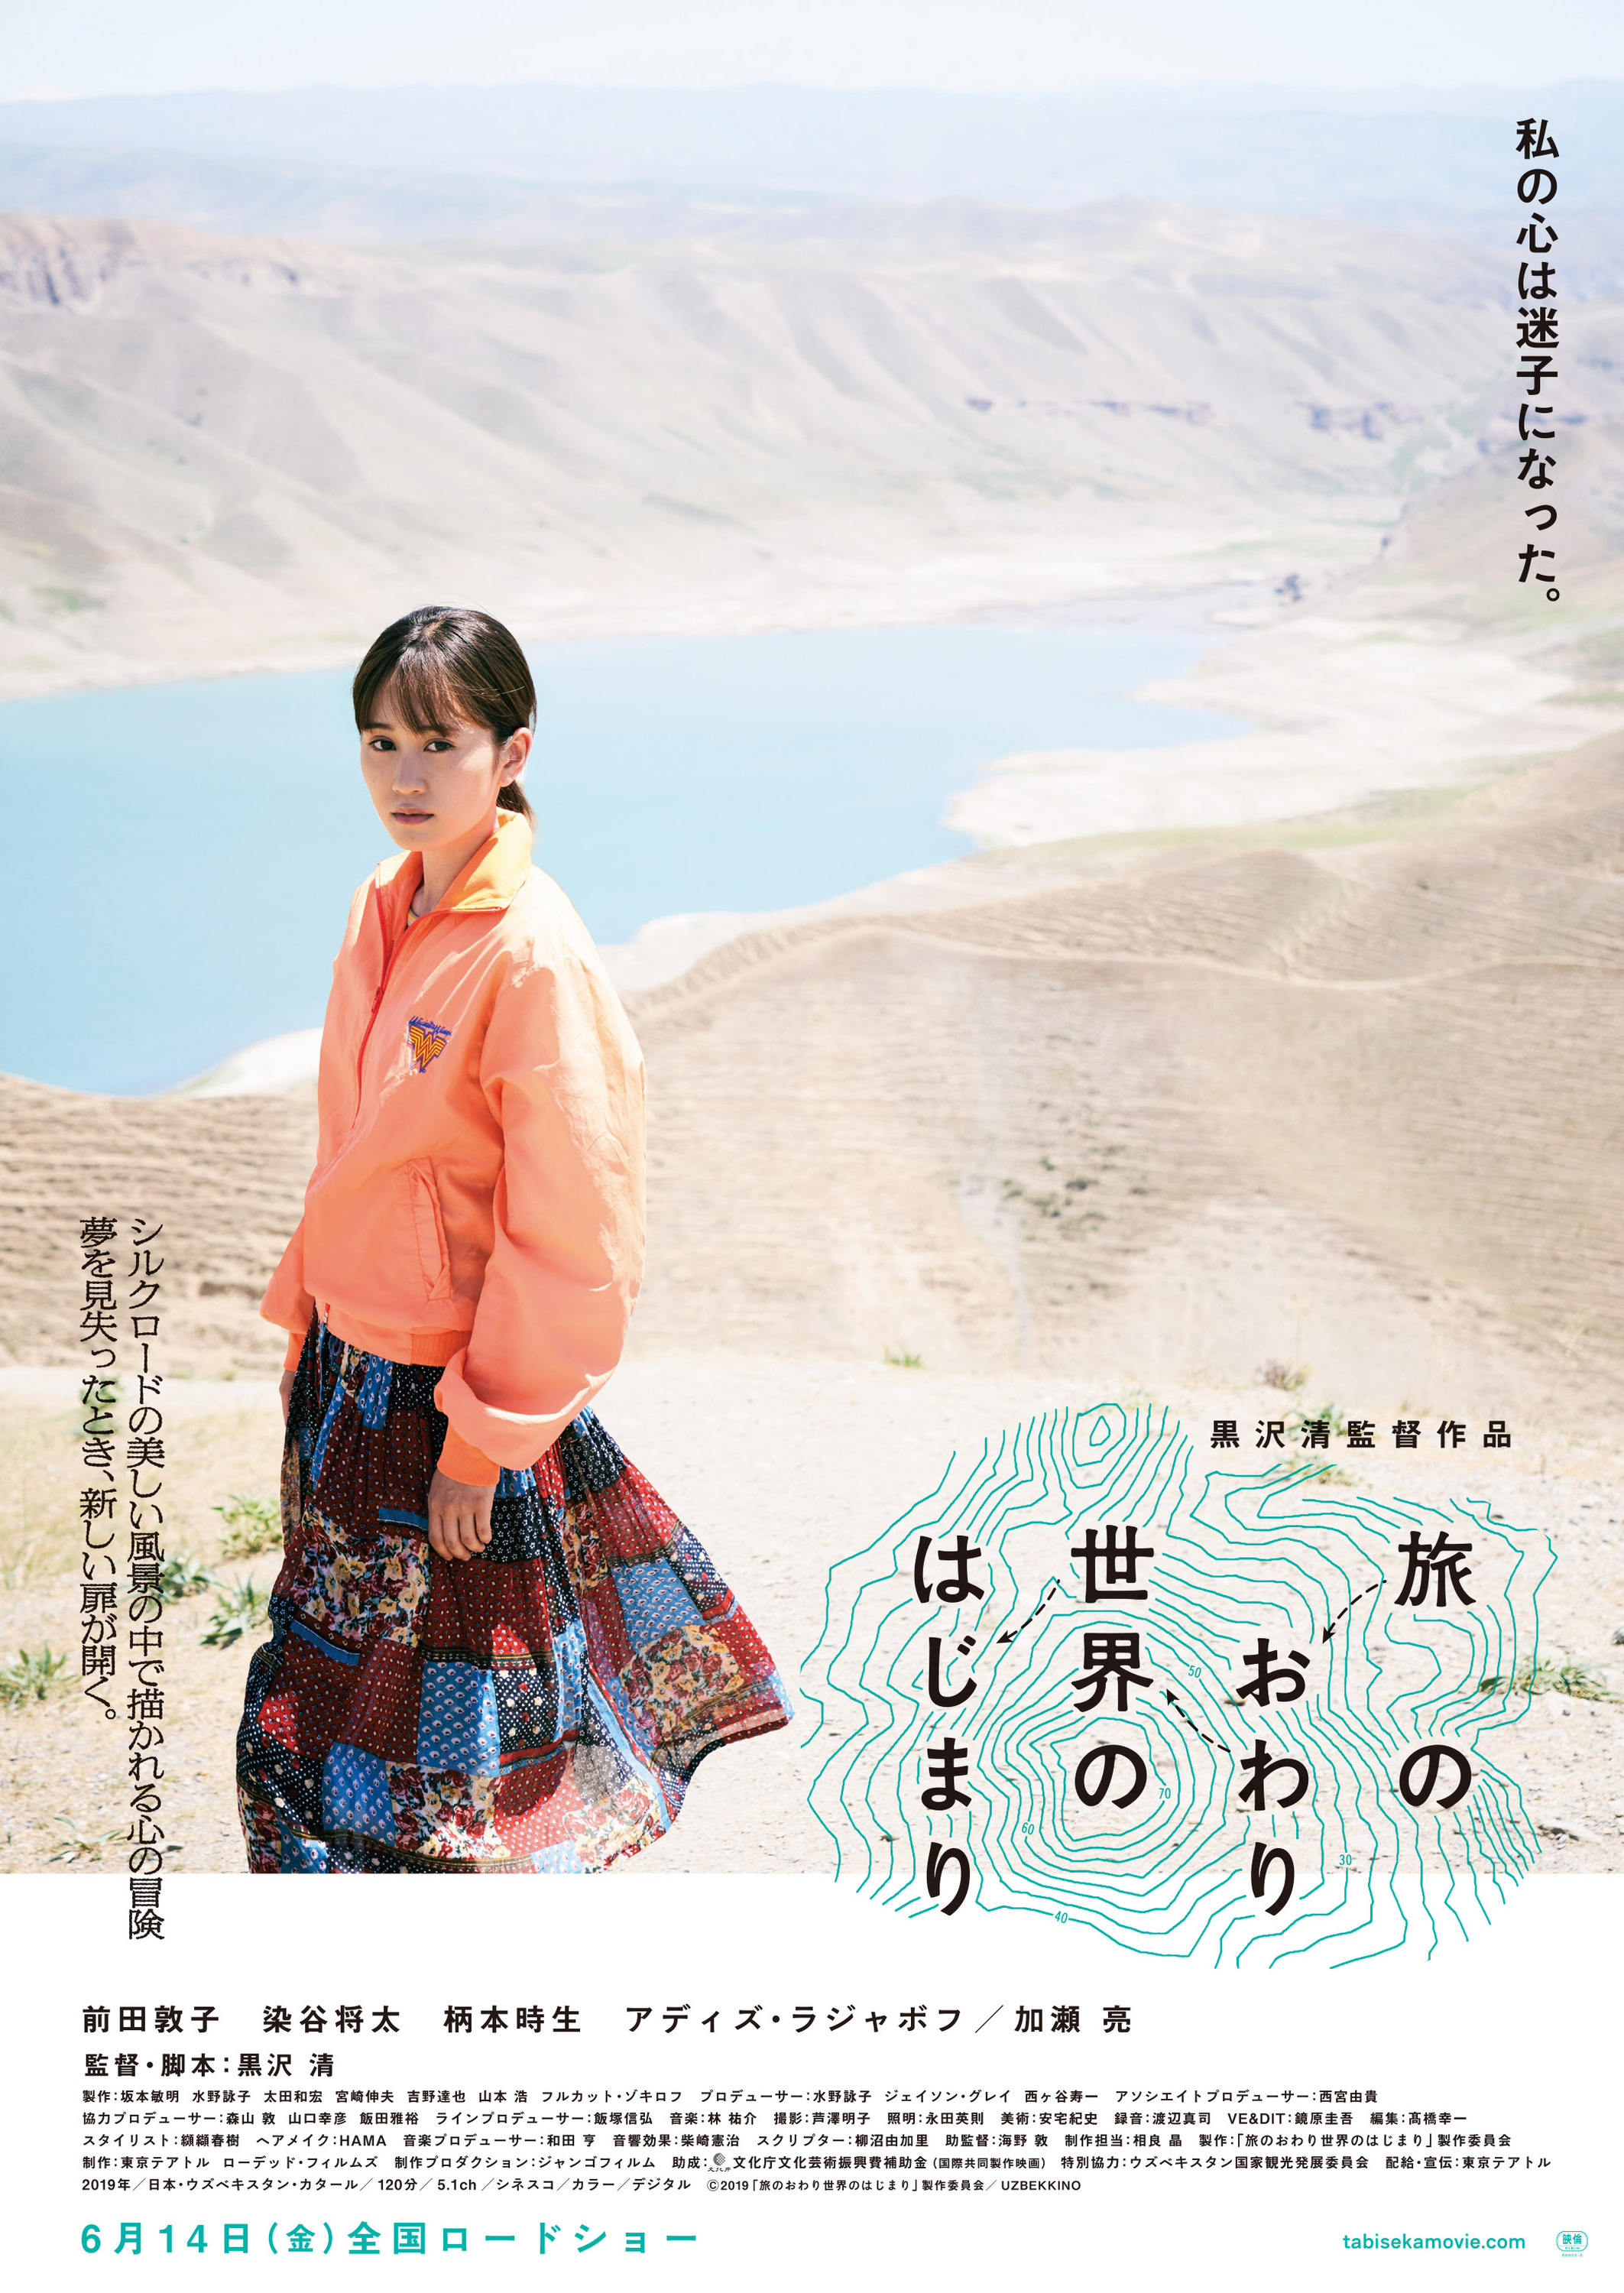 Mega Sized Movie Poster Image for Tabi no owari sekai no hajimari (#1 of 2)